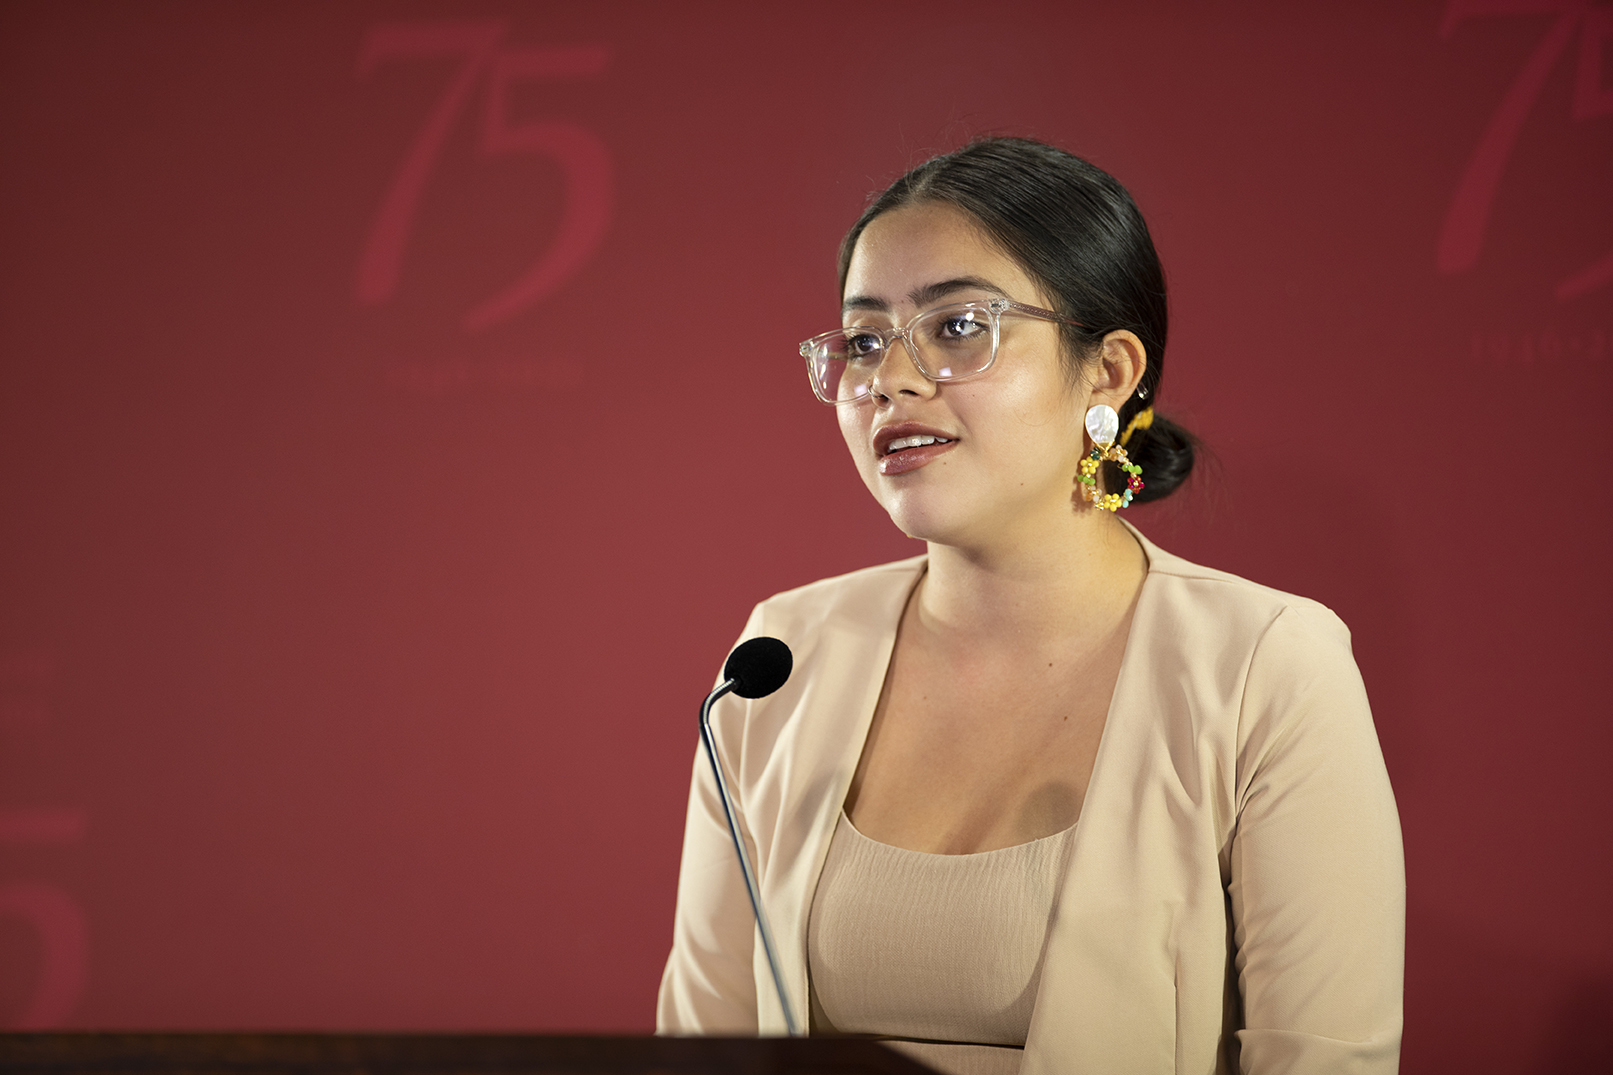 ASCMC President Katherine Almendarez ’22 shares her final reflections